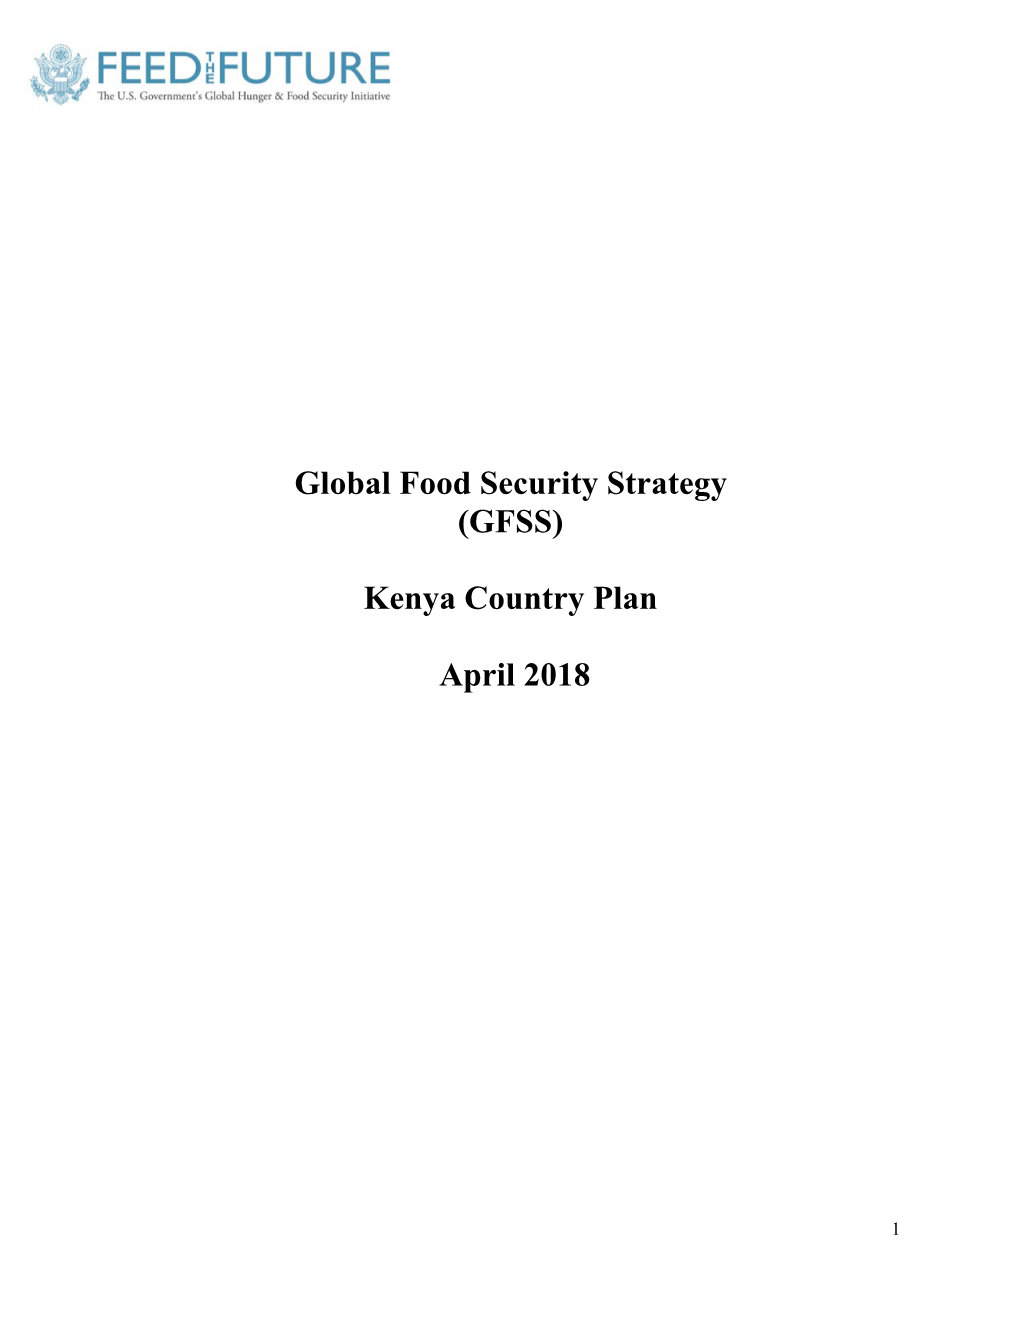 Global Food Security Strategy (GFSS) Kenya Country Plan